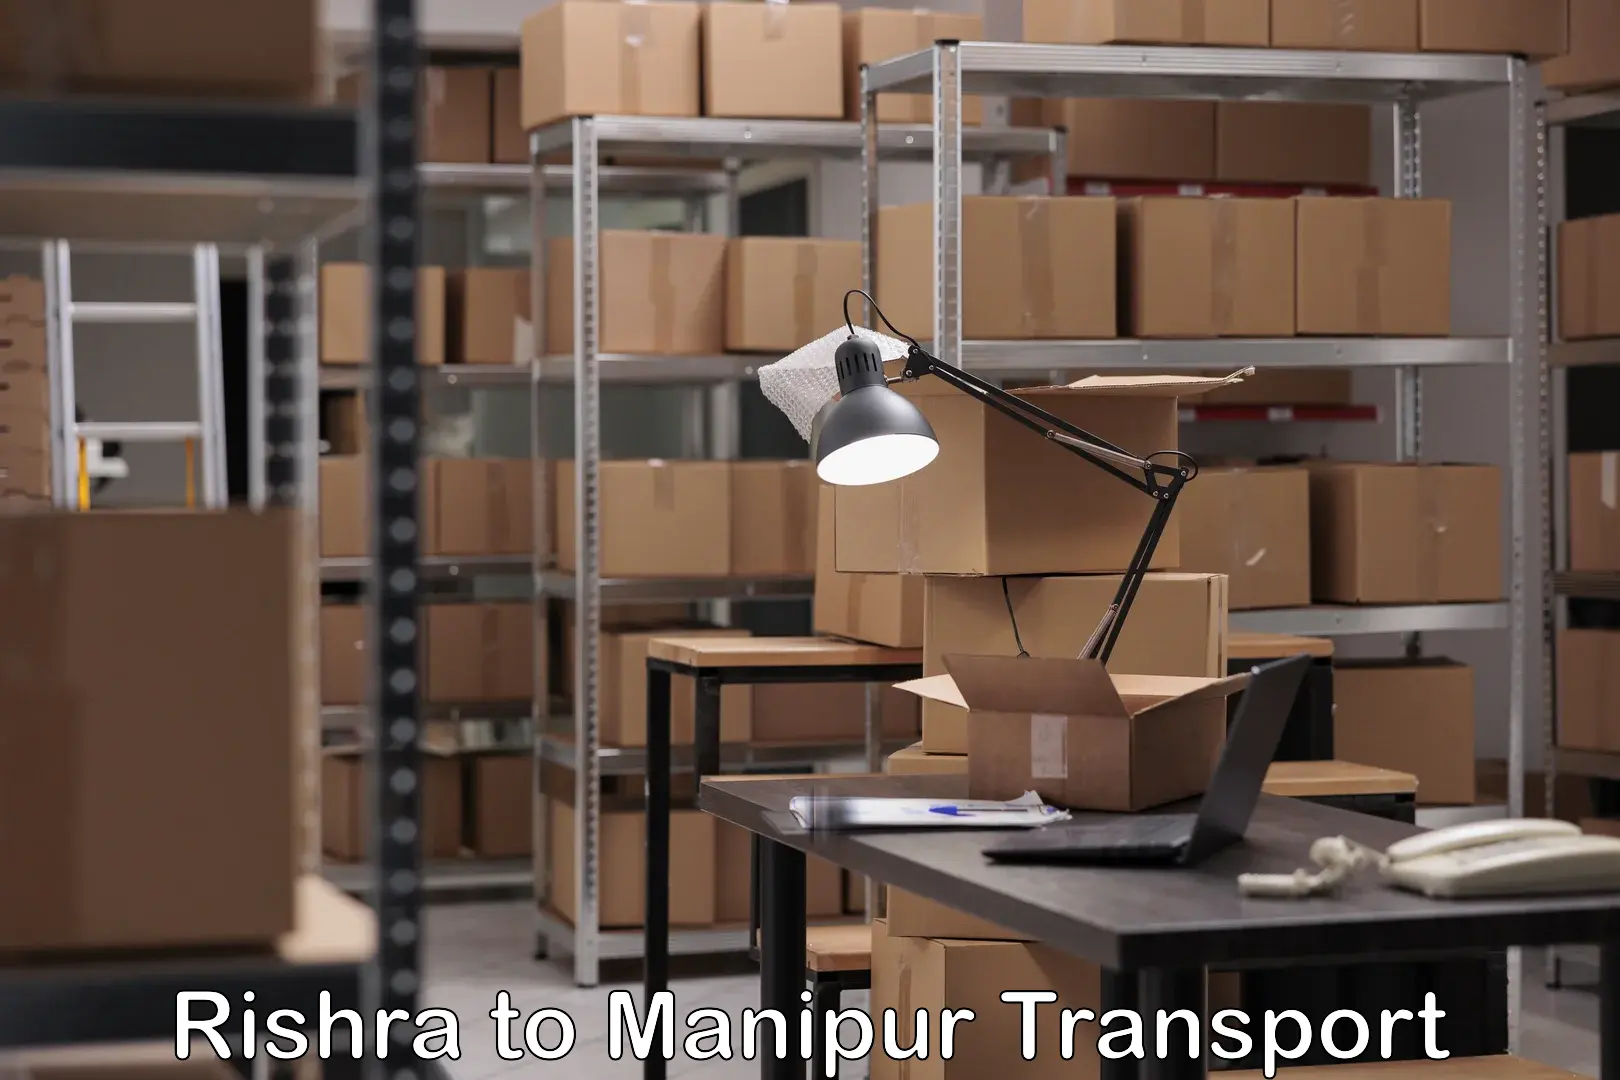 Truck transport companies in India Rishra to Manipur